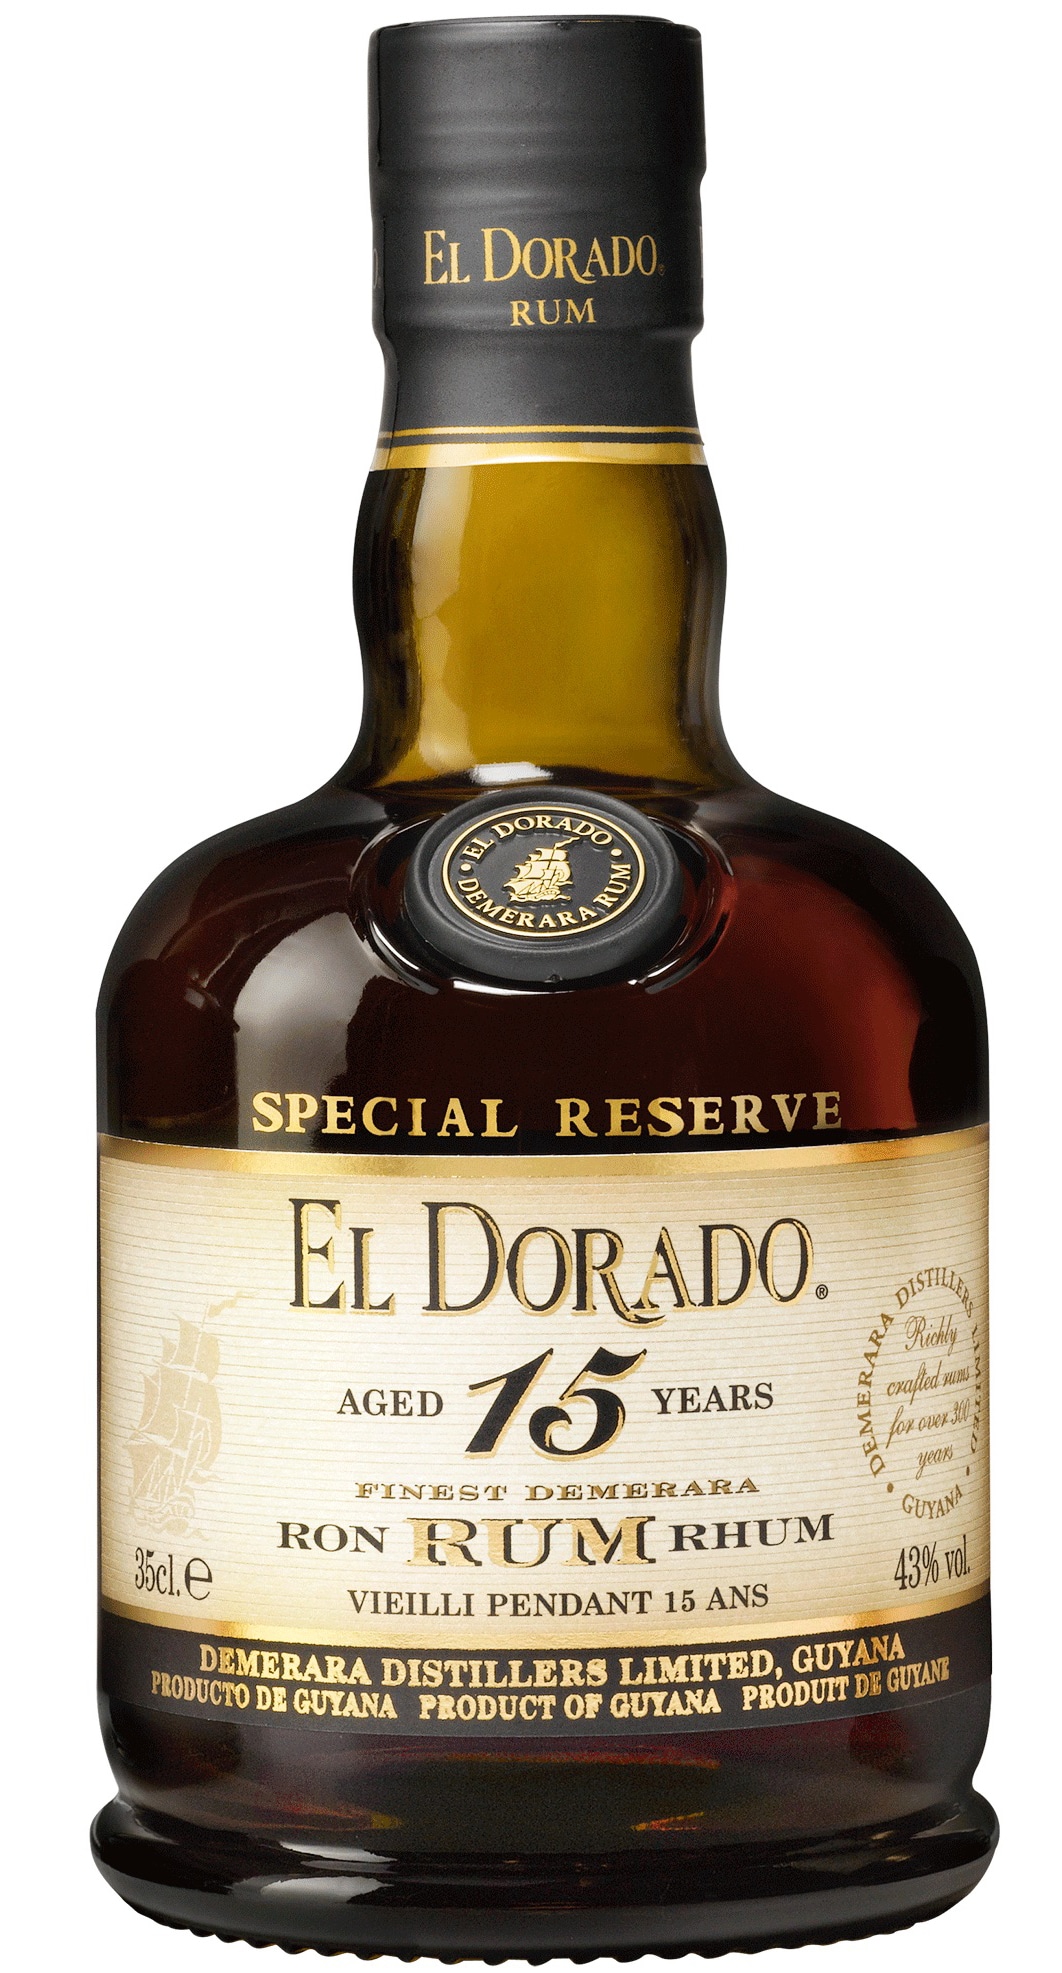 Compagnia dei Caraibi arricchisce il suo portfolio con El Dorado Rum